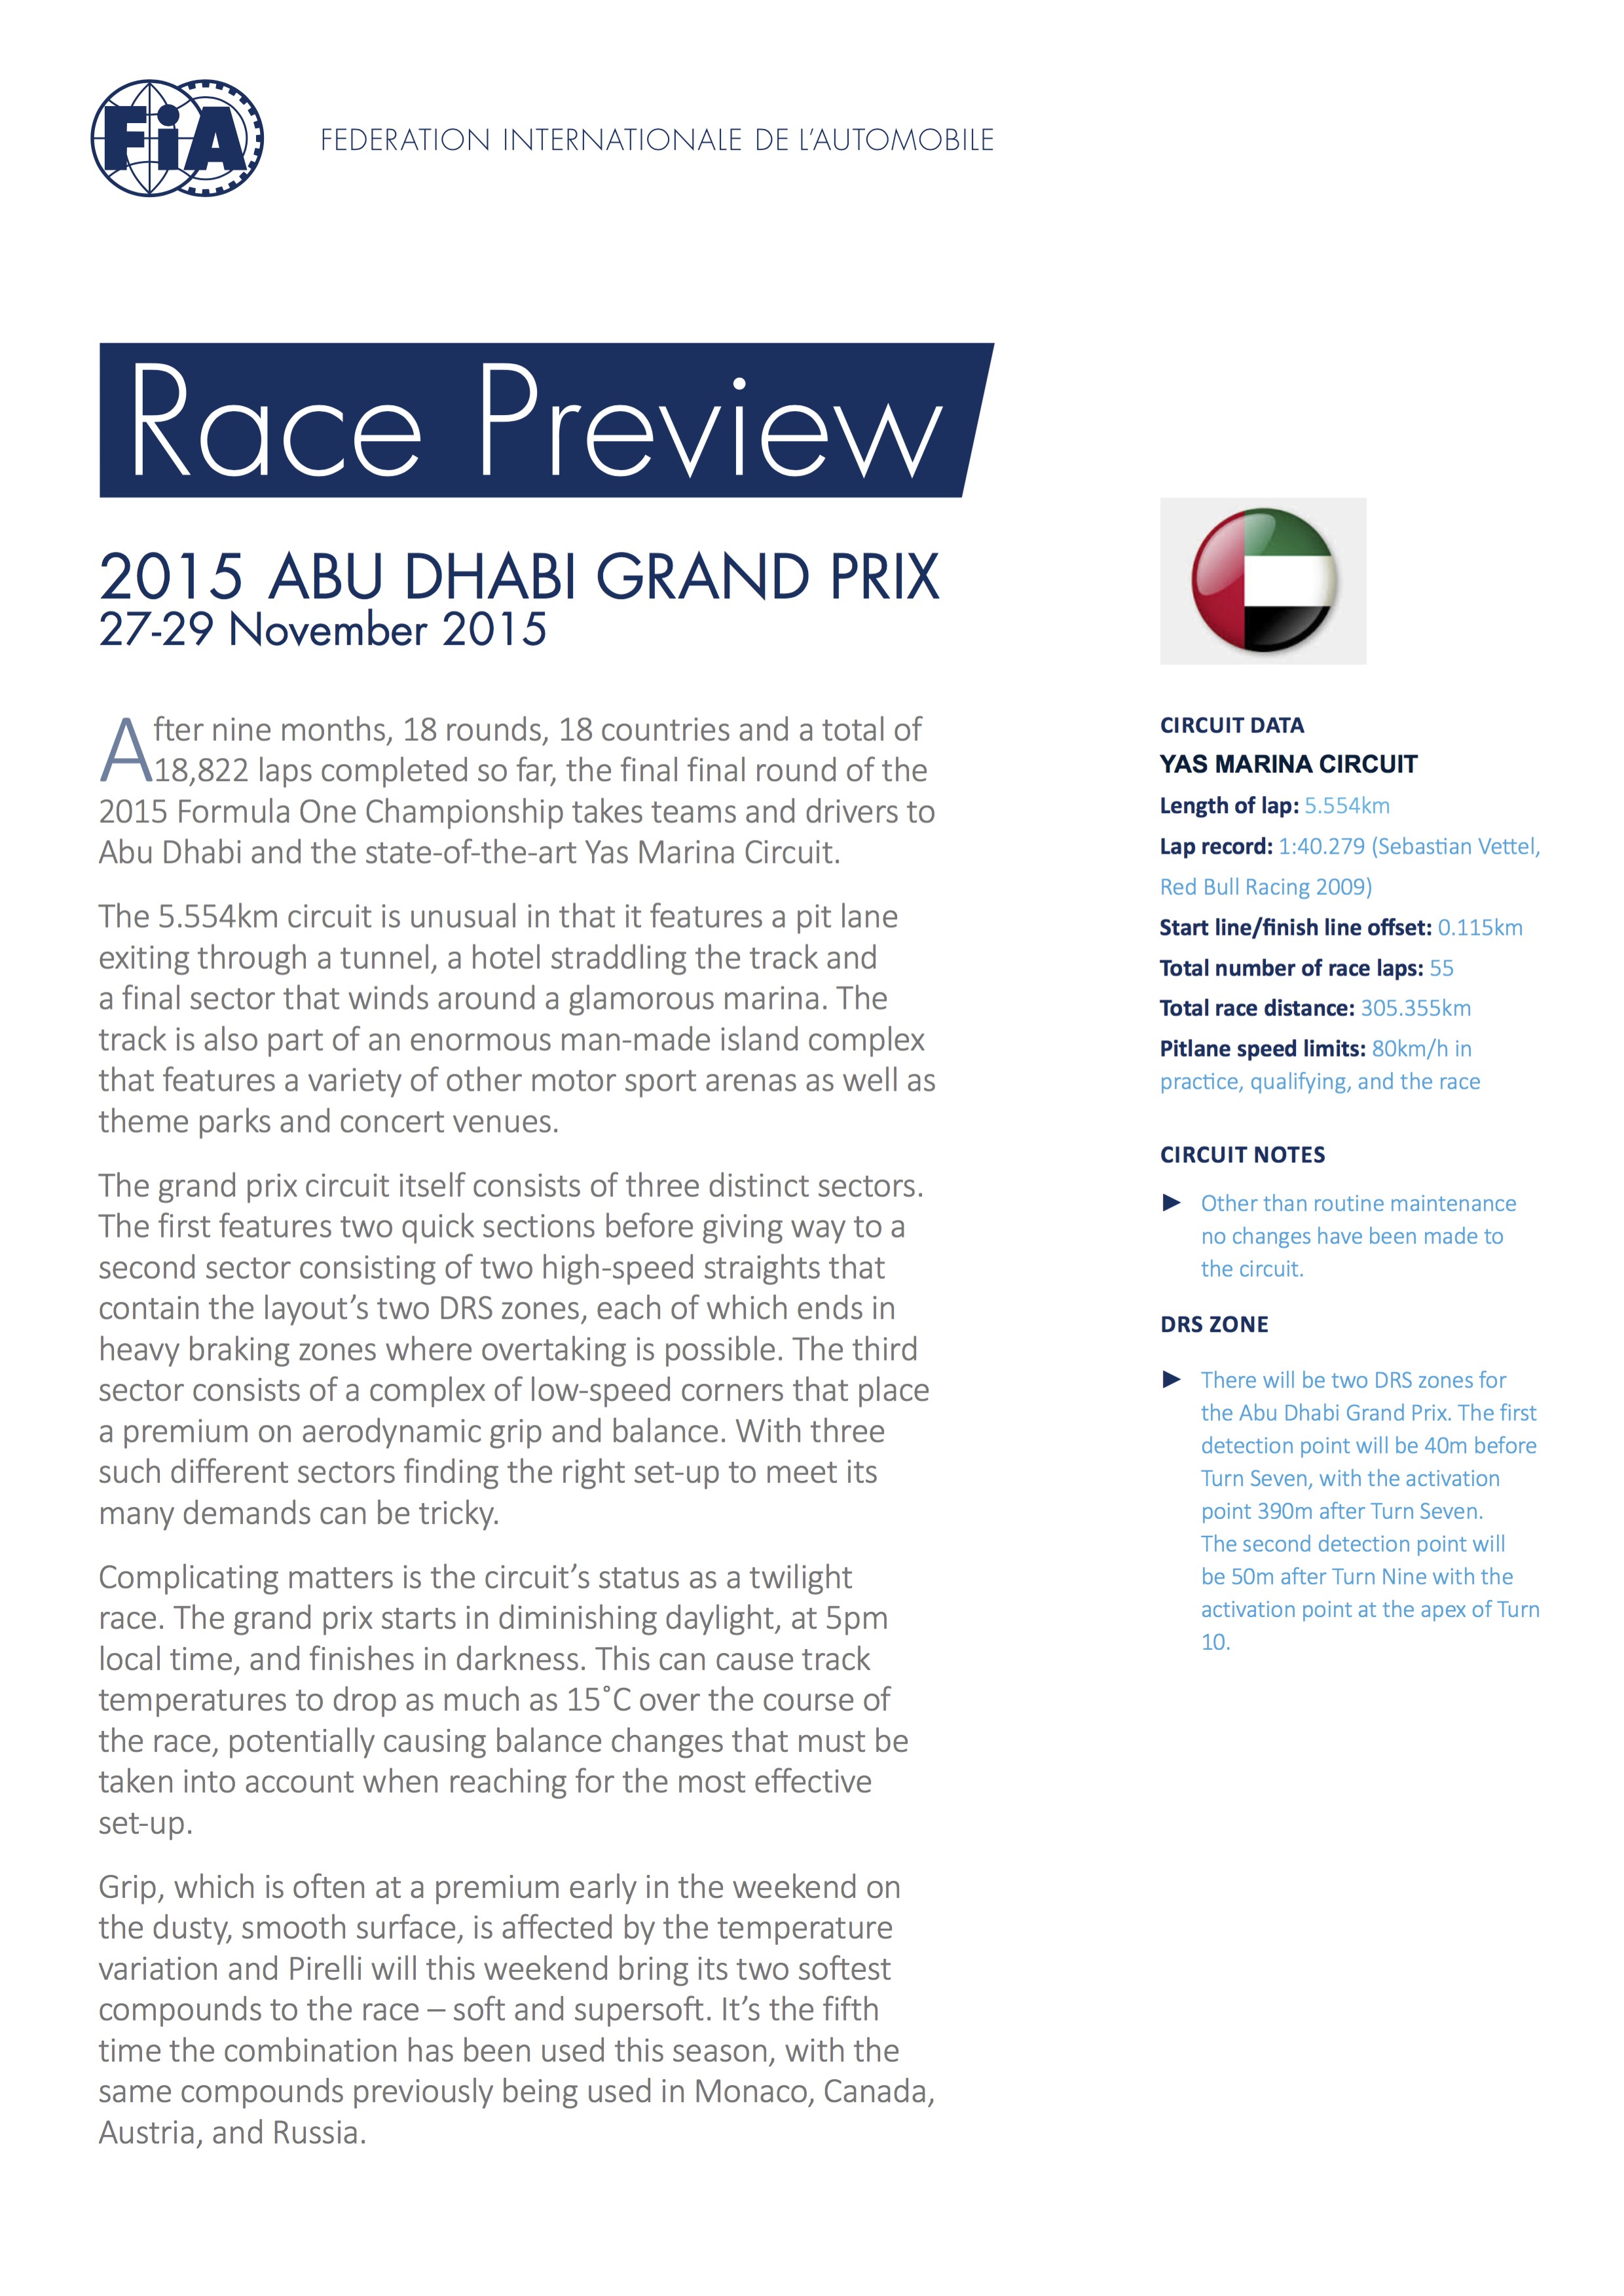 Abu Dhabi GP Preview